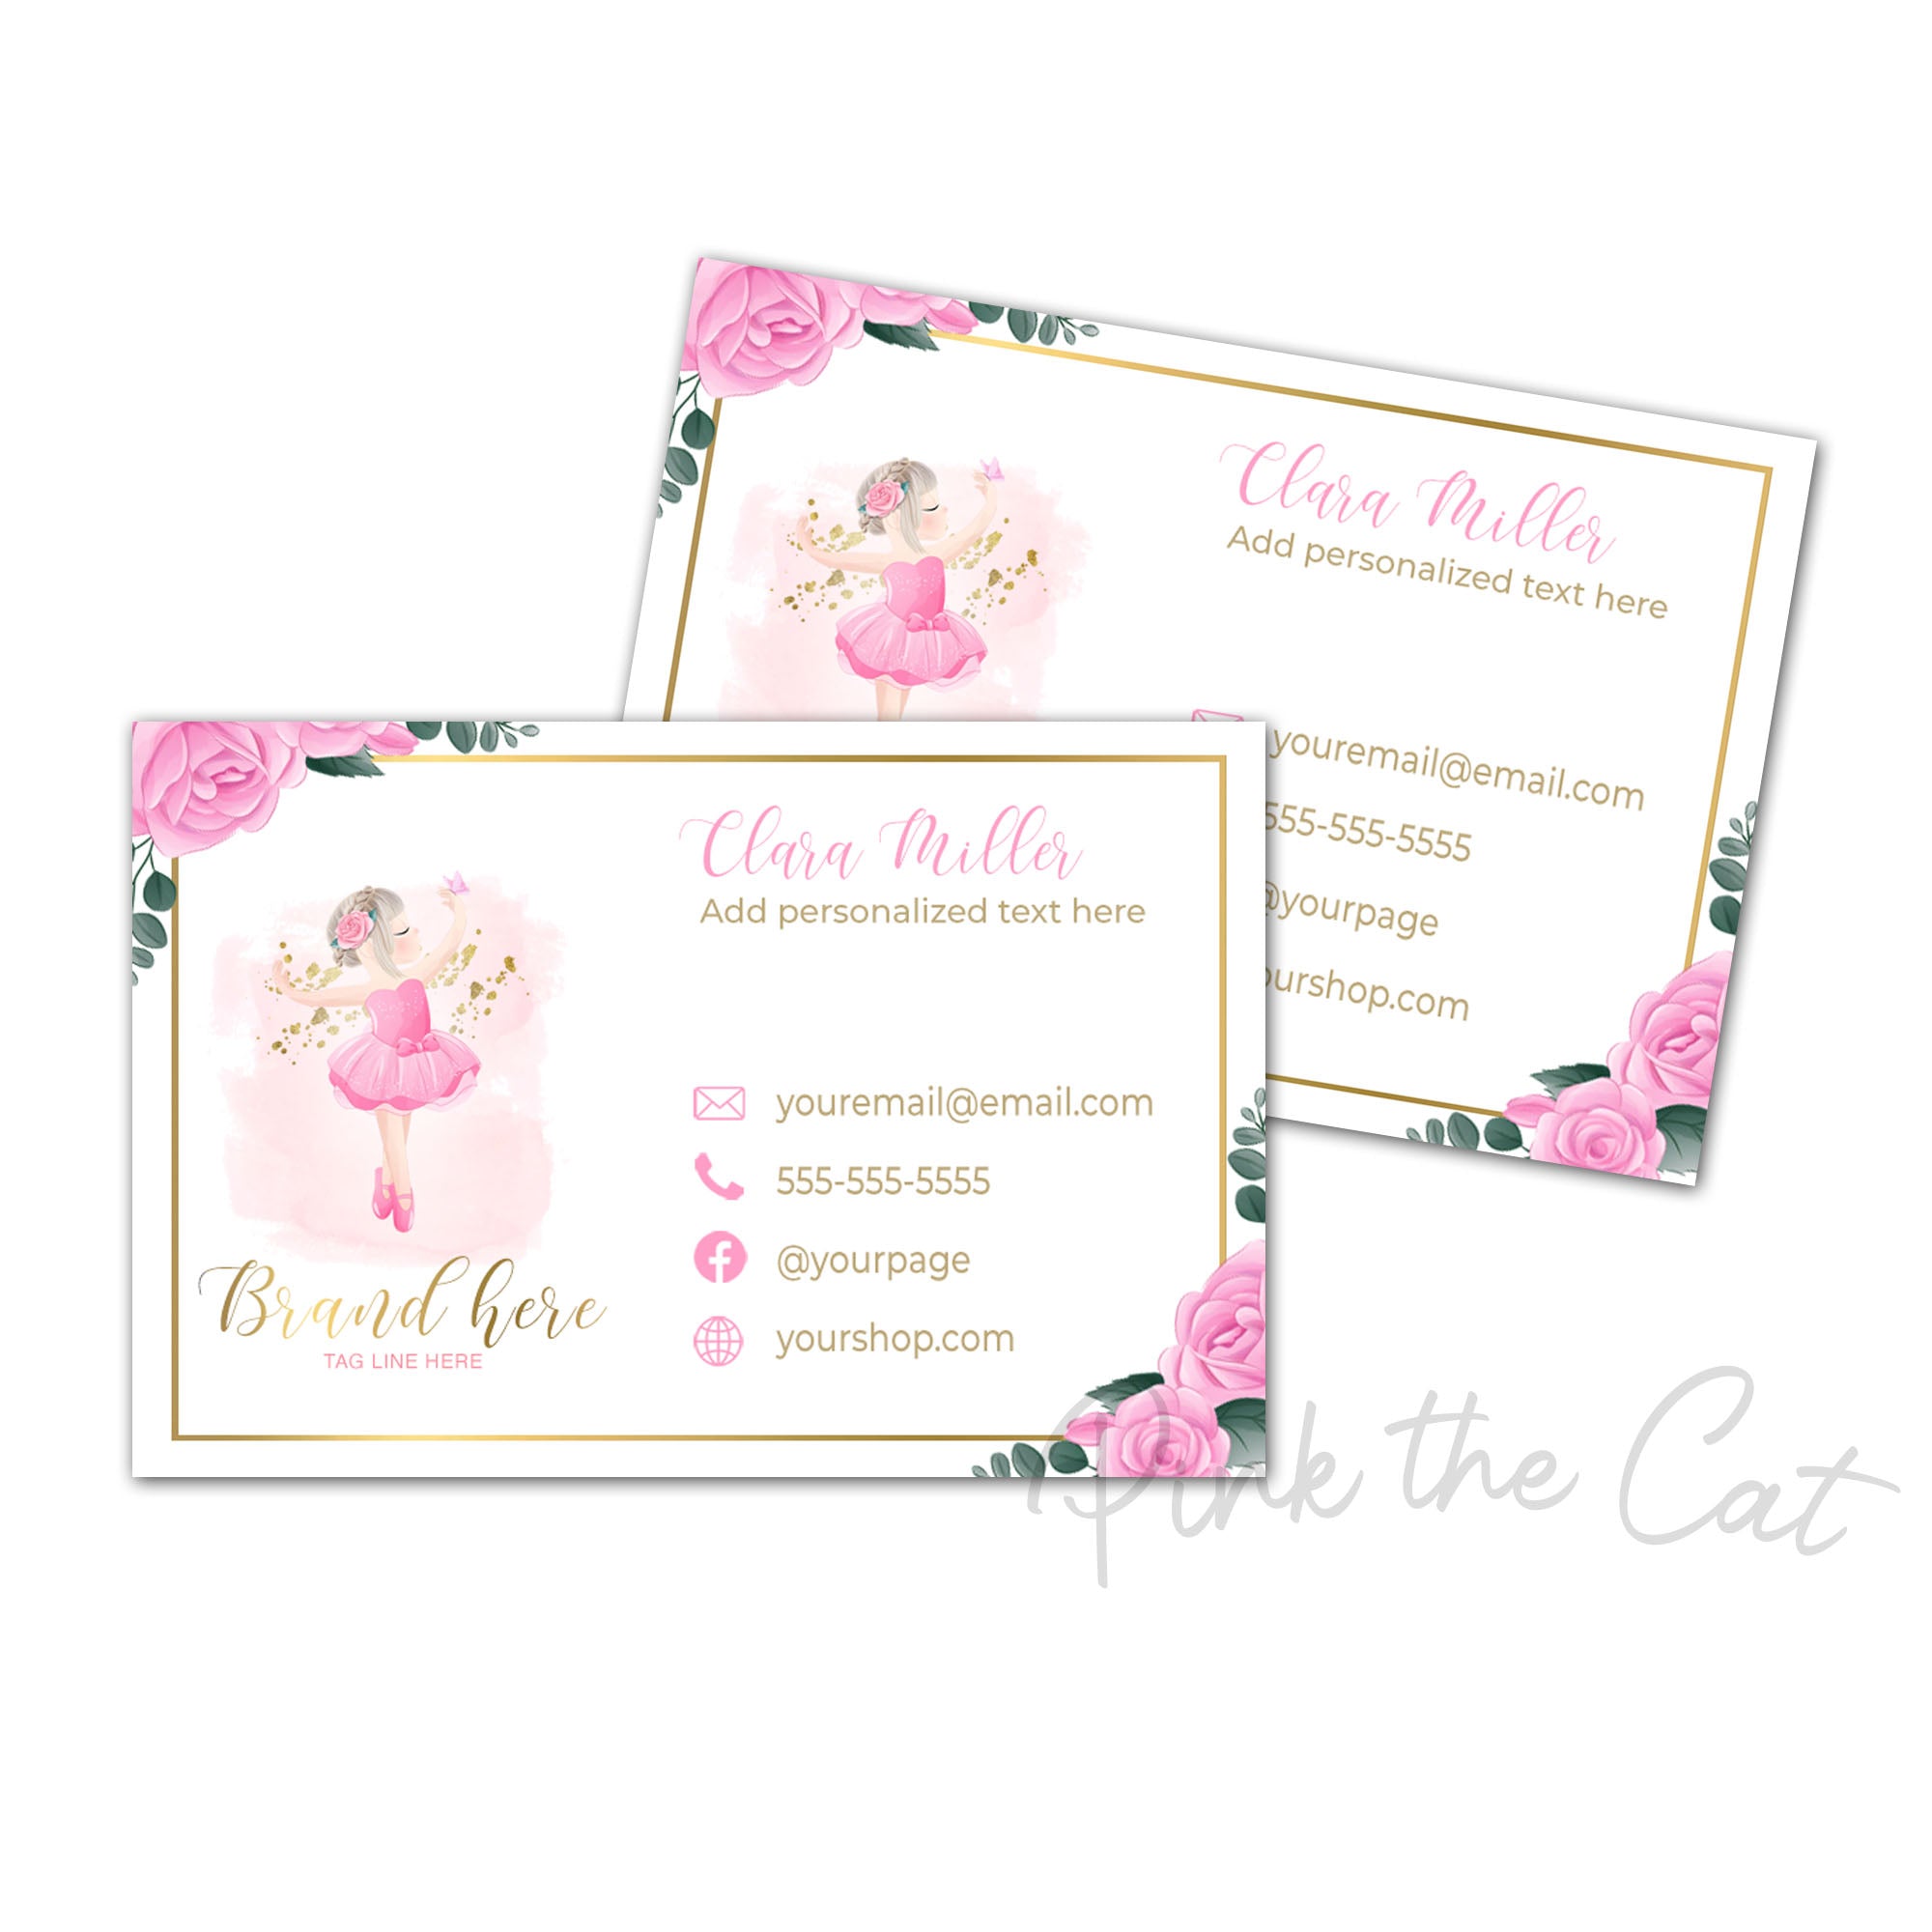 Ballerina business card tutu pink watercolor